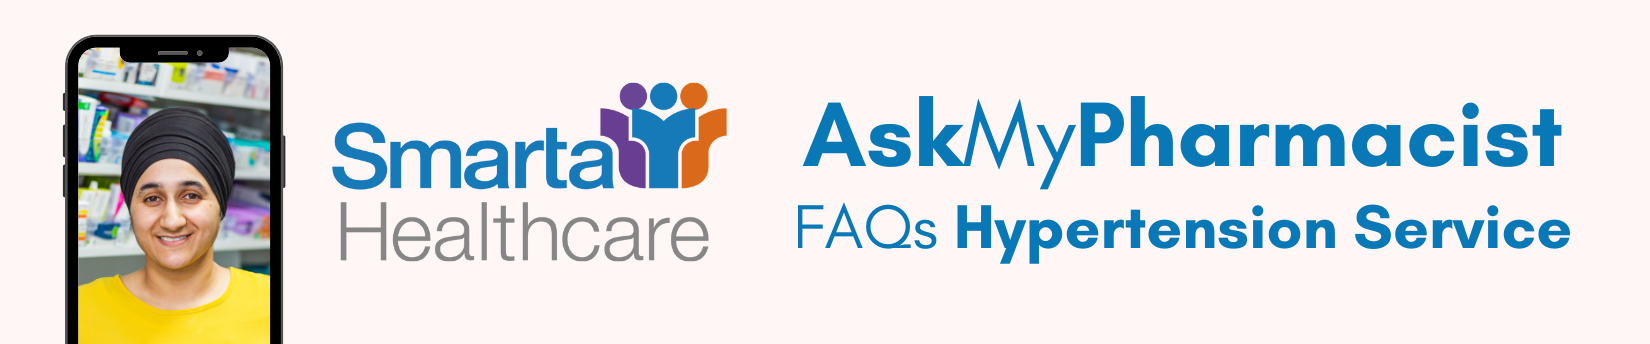 Smarta Healthcare AskMyPharmacist FAQS Hypertension